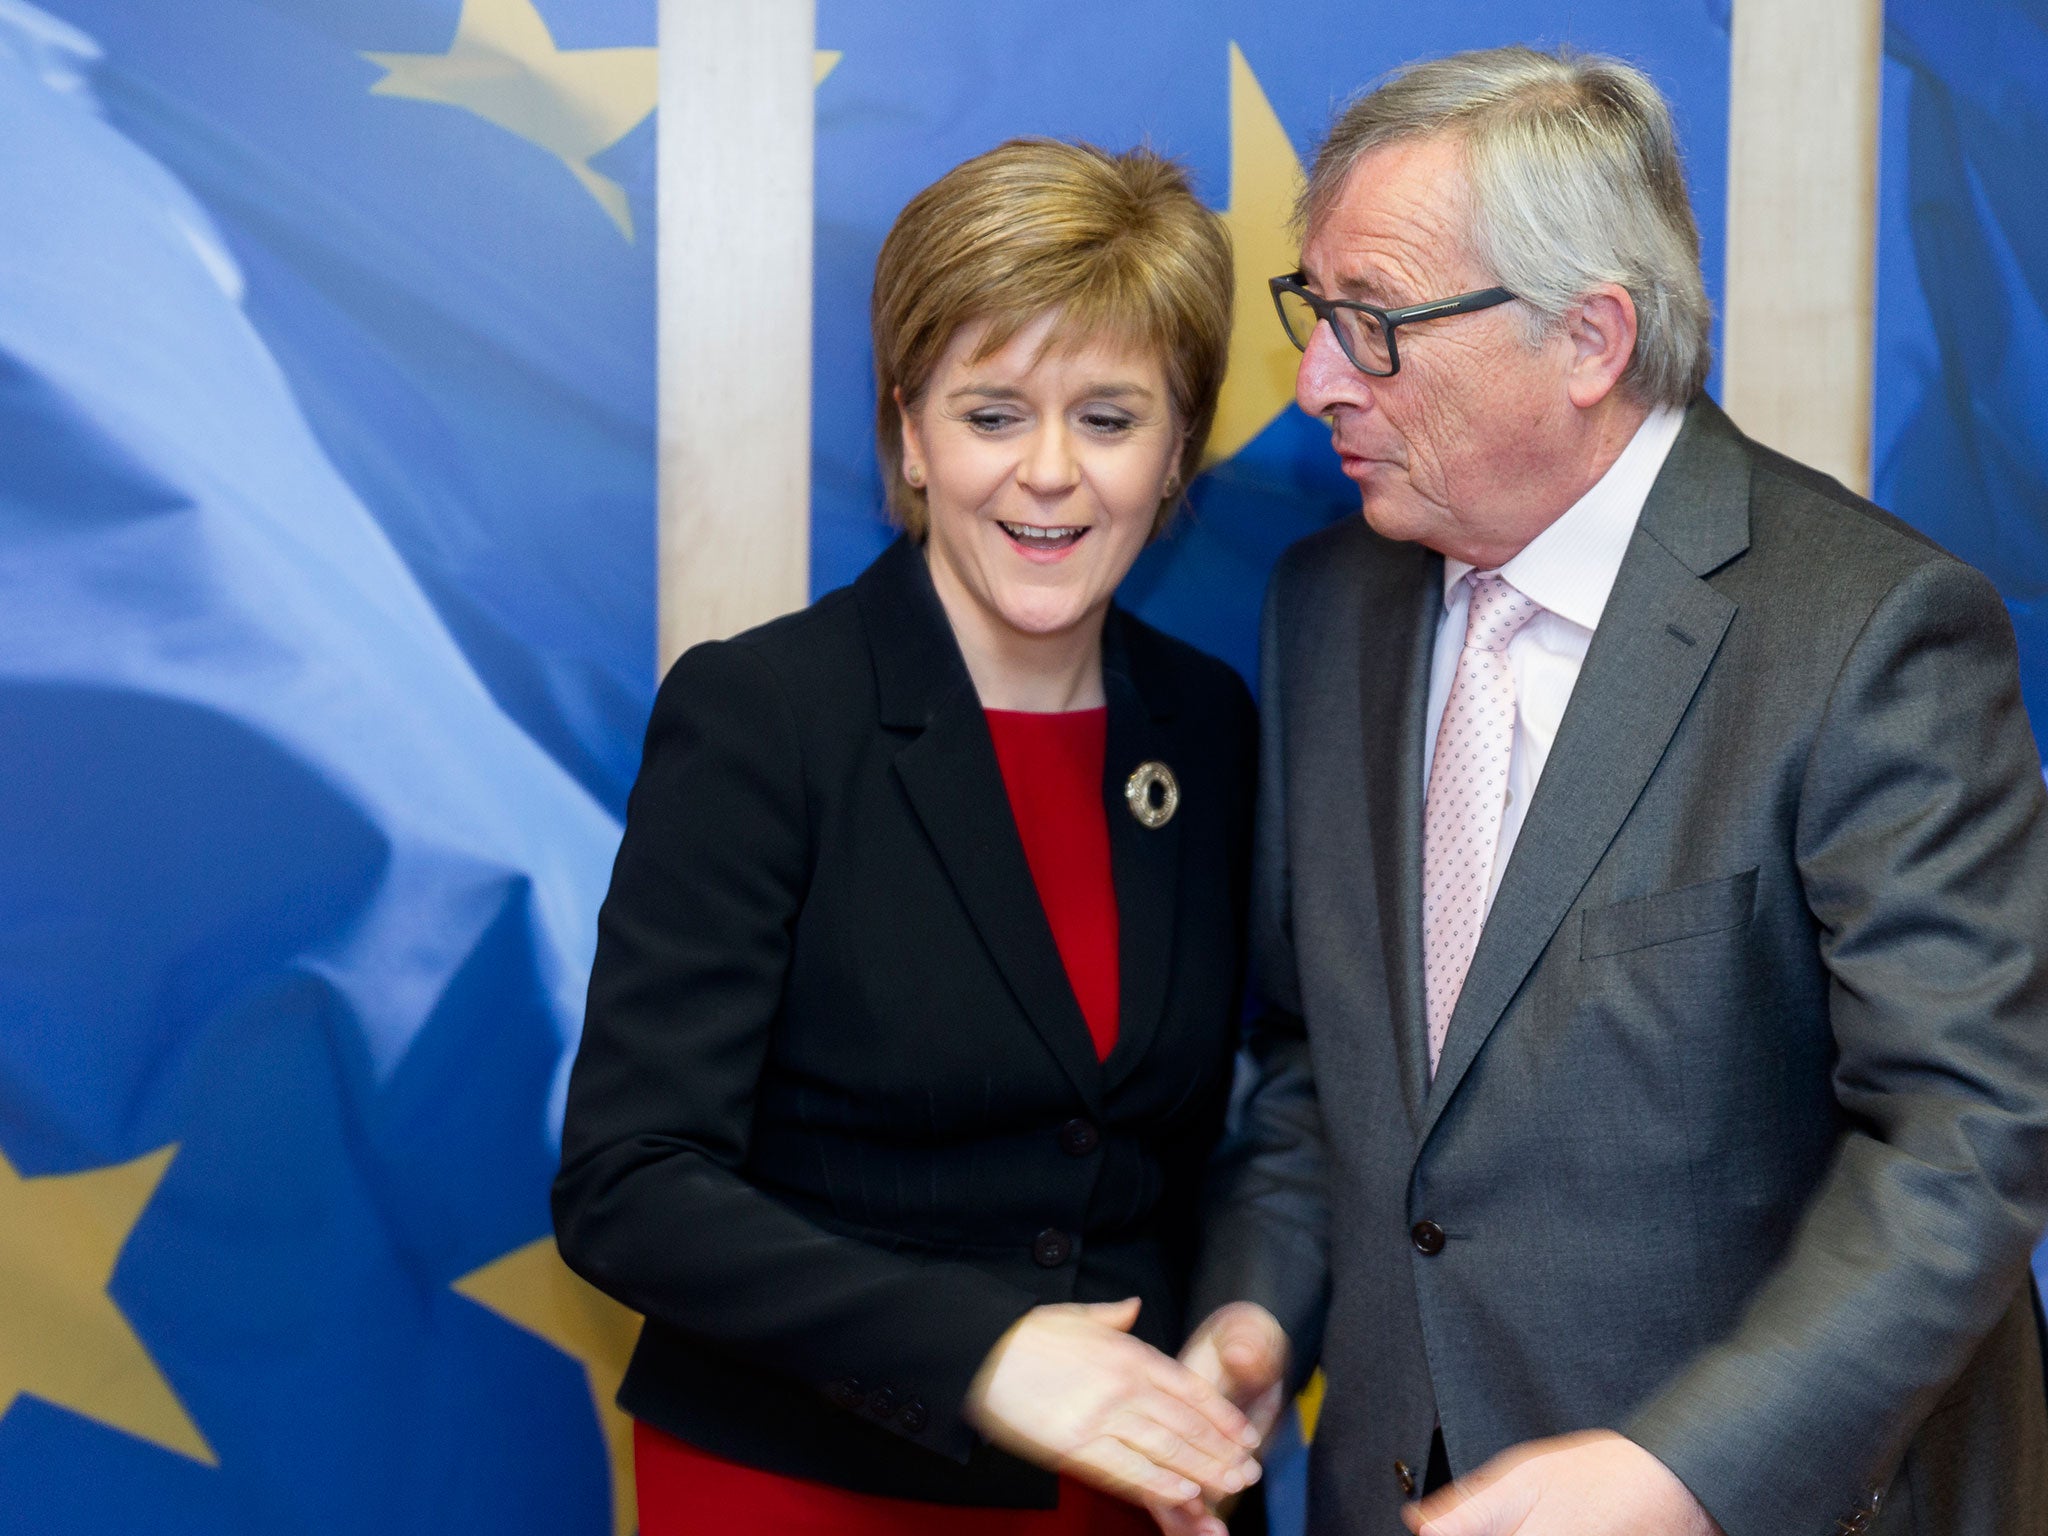 Scotland’s First Minister Nicola Sturgeon (left) with European Commission President Jean-Claude Juncker